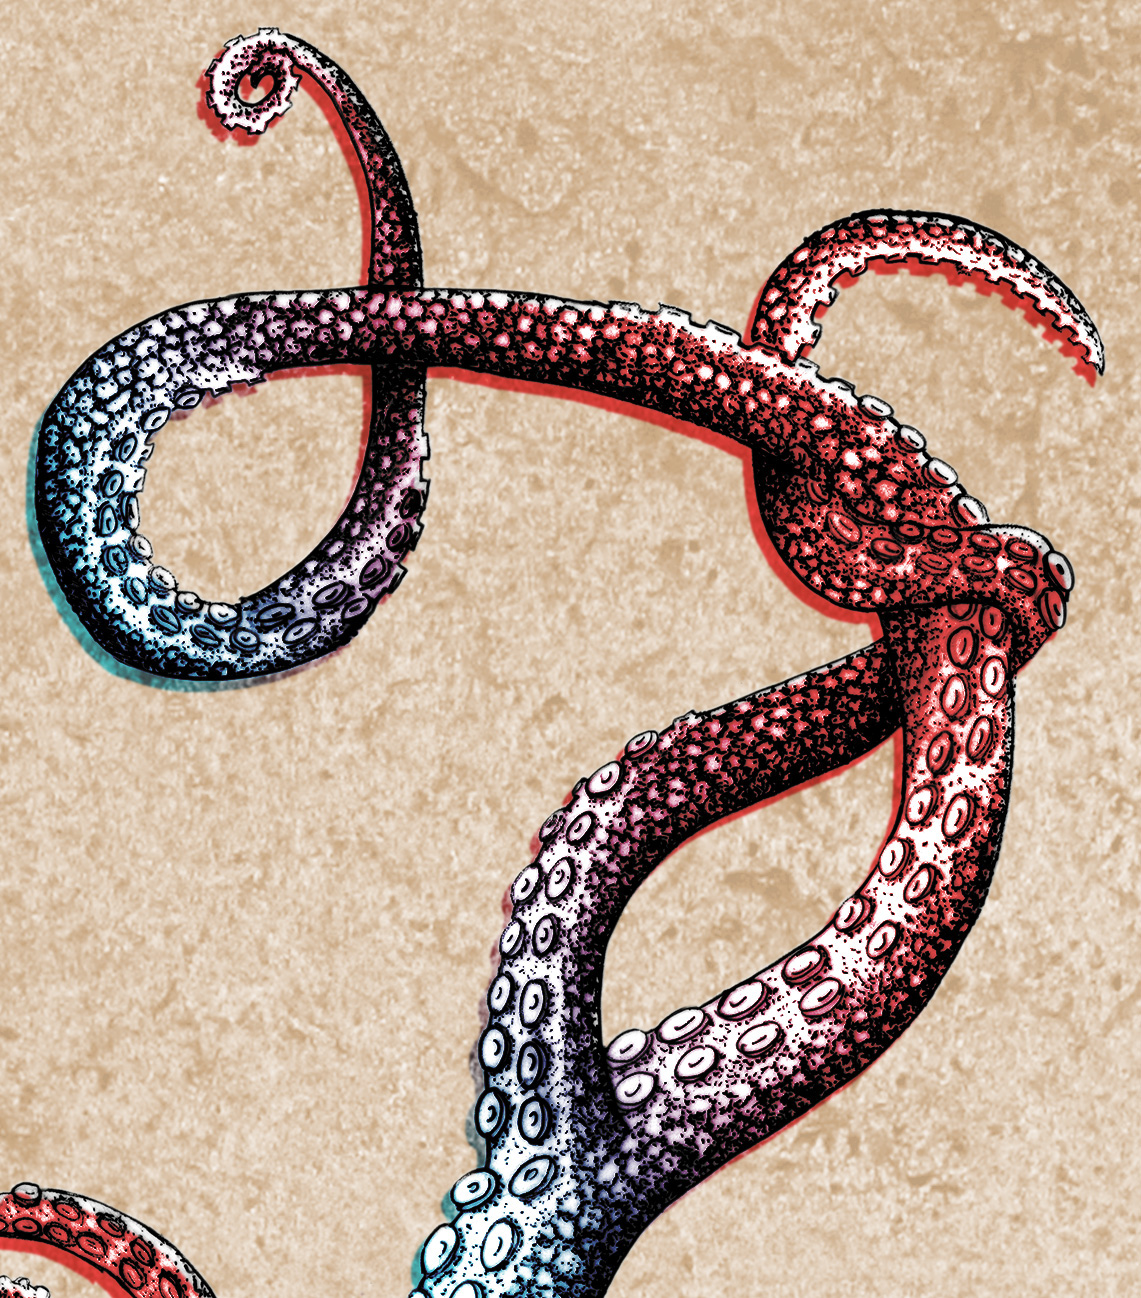 animal hybrid deer octopus tentacles scientific illustration silkscreen